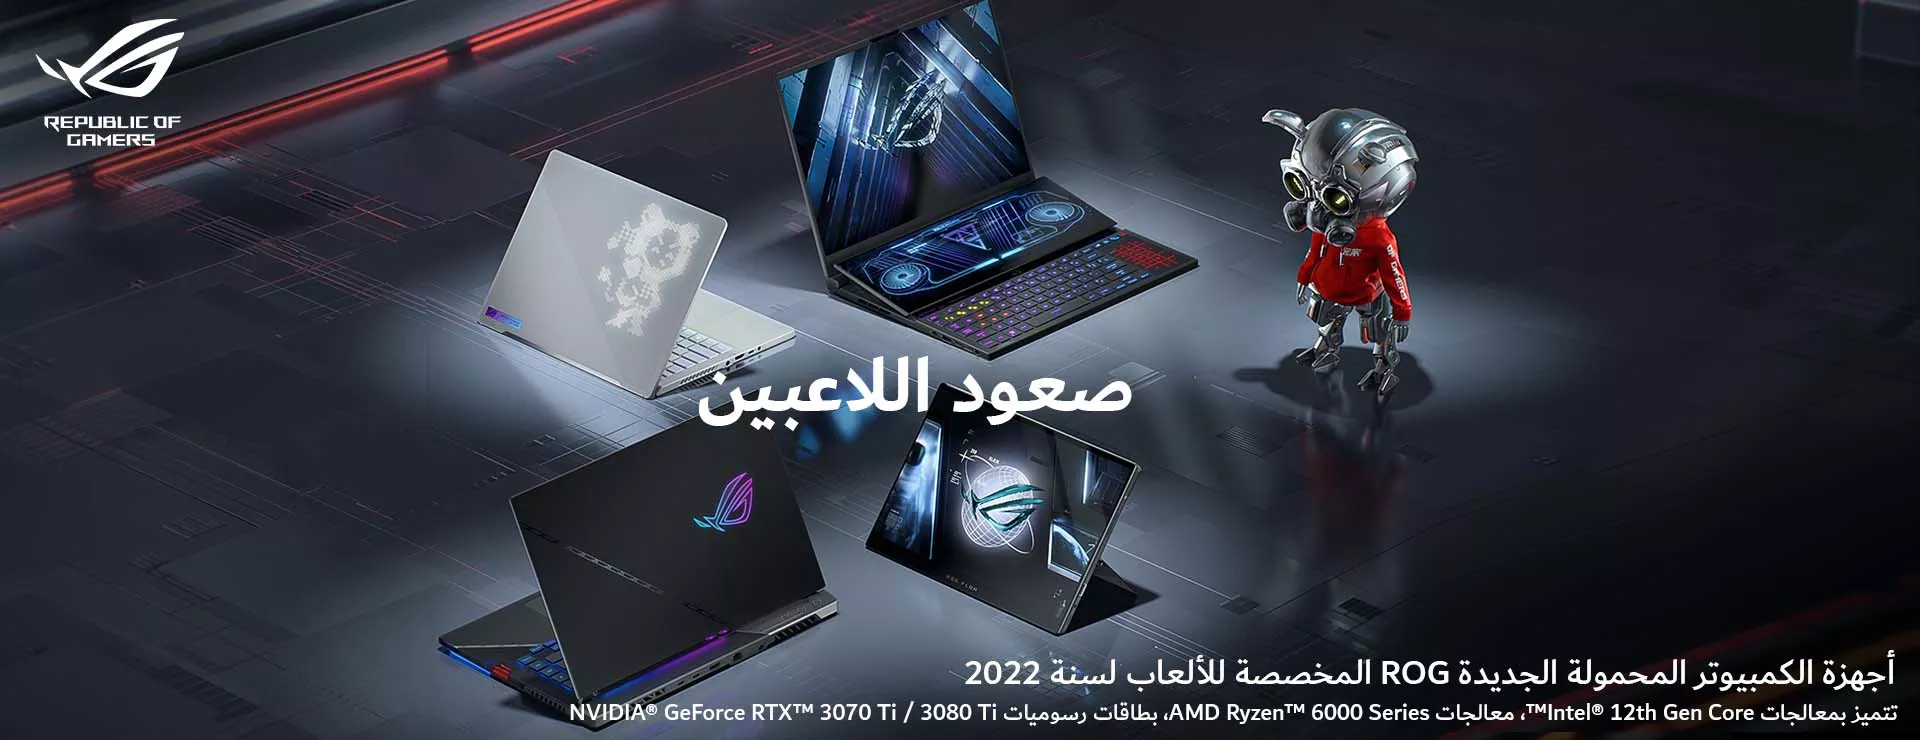 2022-ces-rog-gaming-laptops